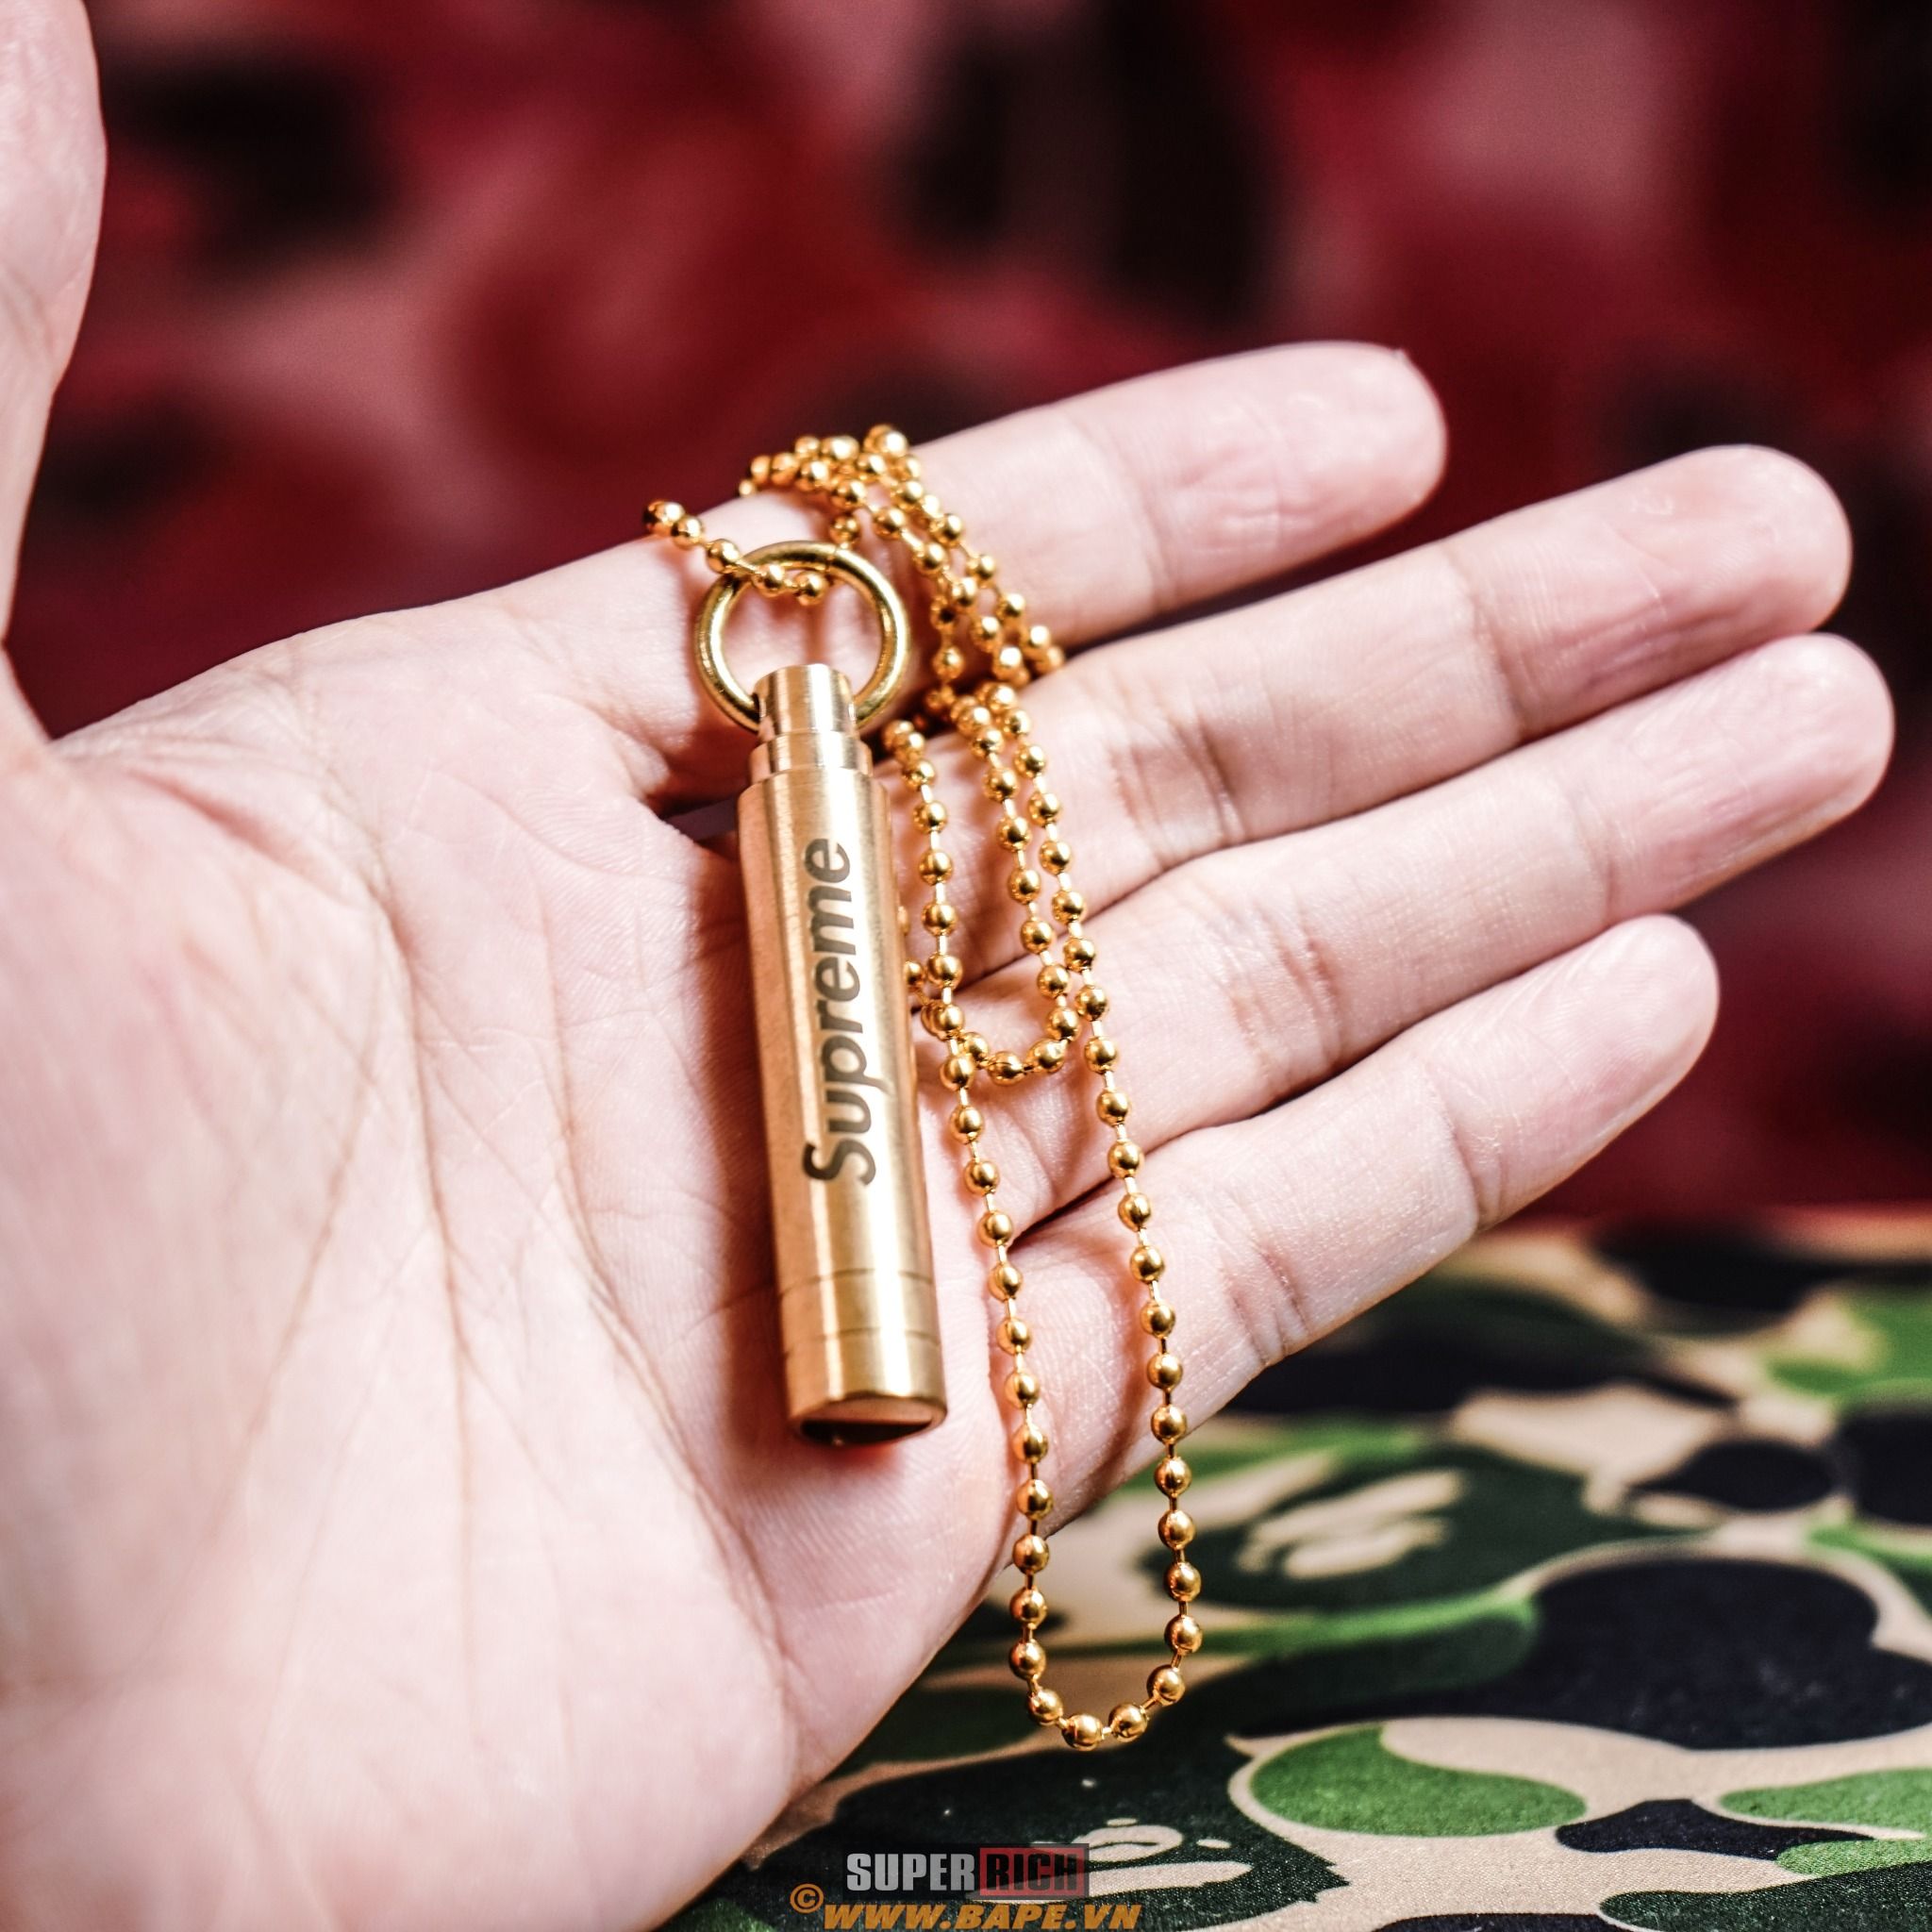 Supreme Whistle Necklace - Dây Chuyền Còi Supreme (HẾT HÀNG)